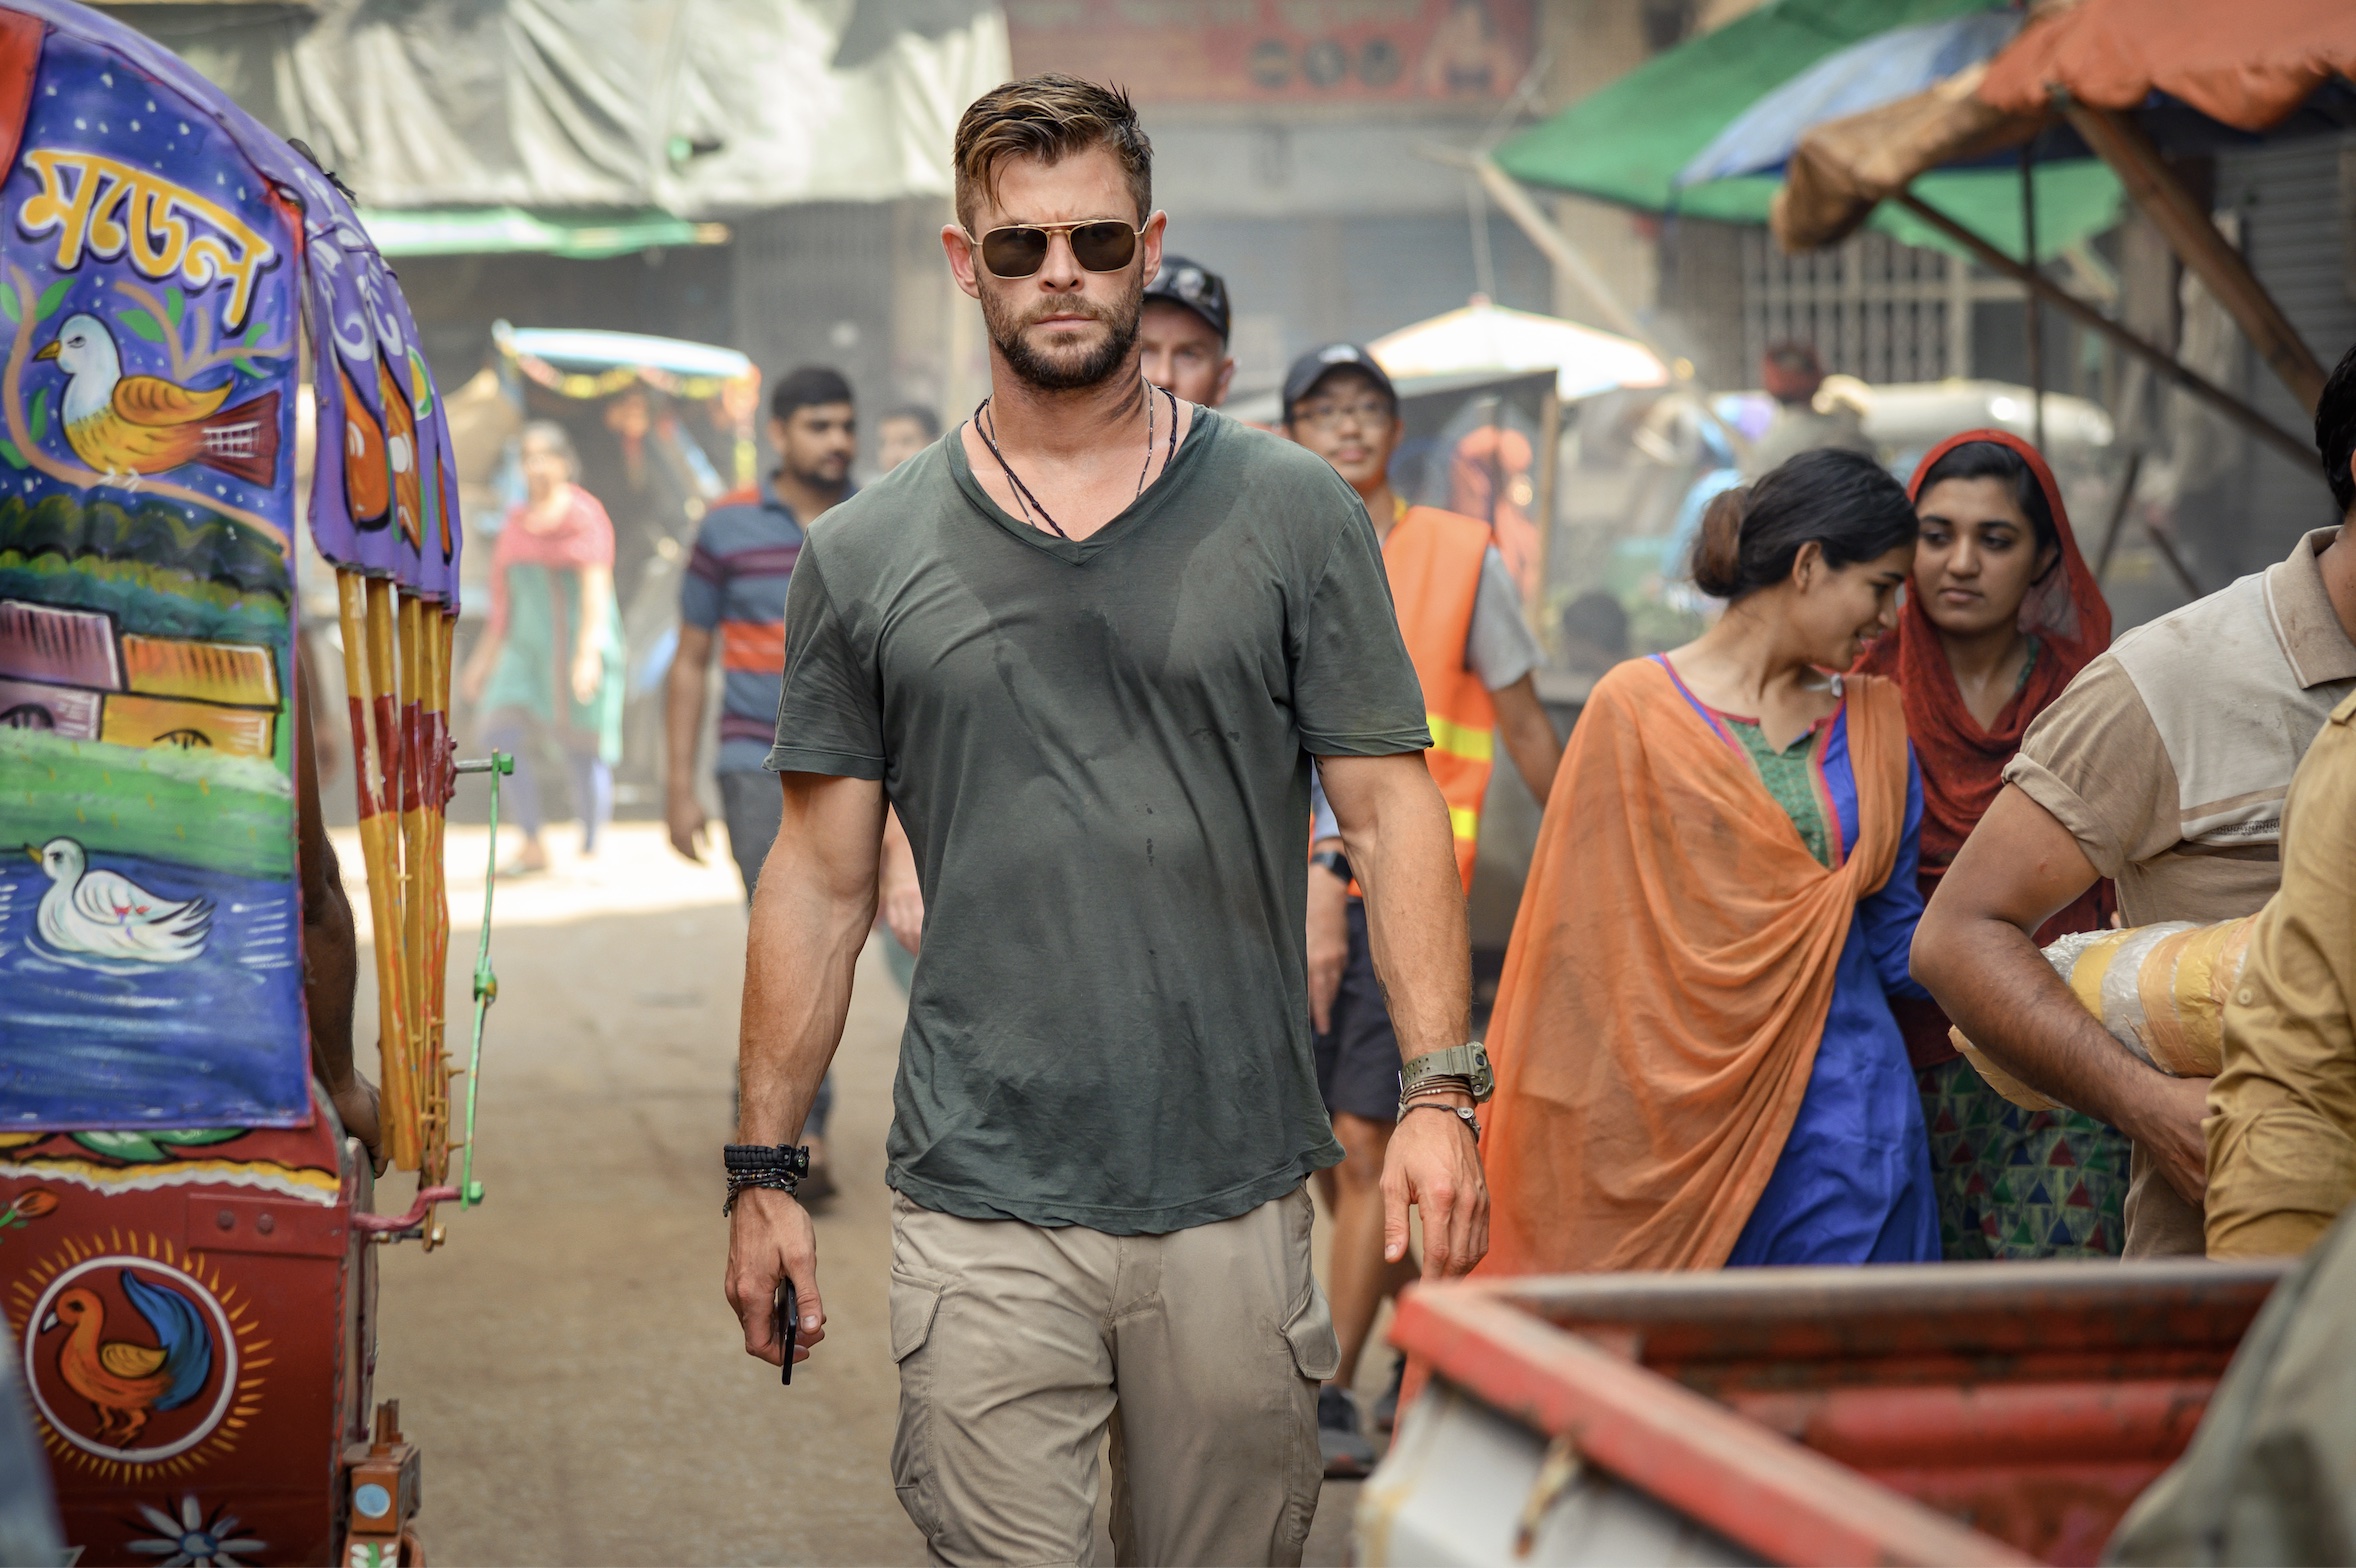 Extraction Cast on Netflix - Chris Hemsworth as Tyler Rake